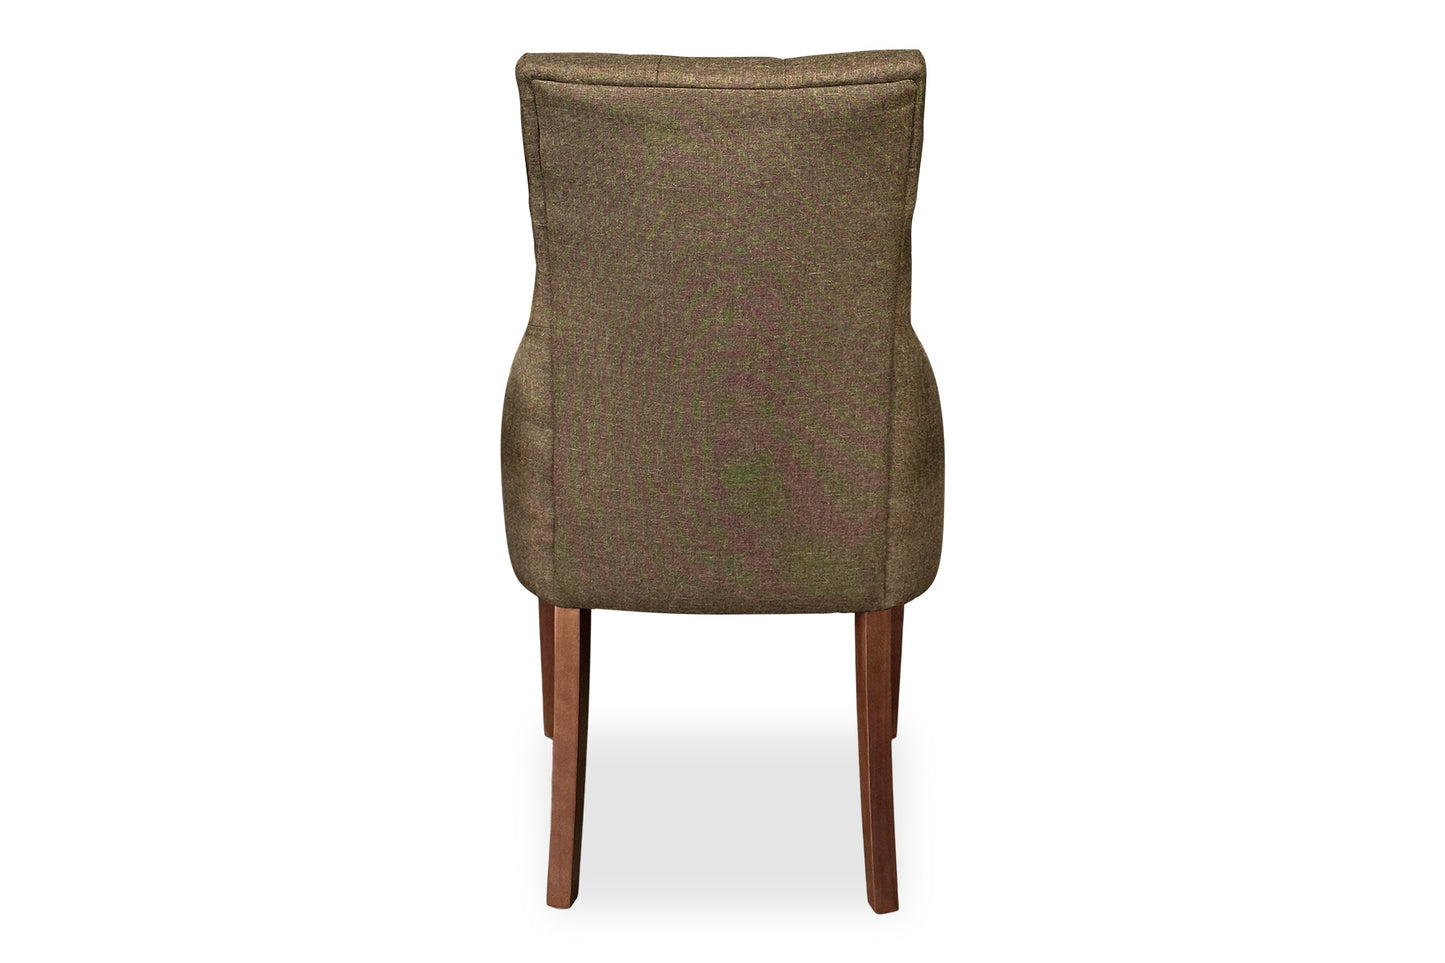 Walnut Scoop Back Chair - Light Brown